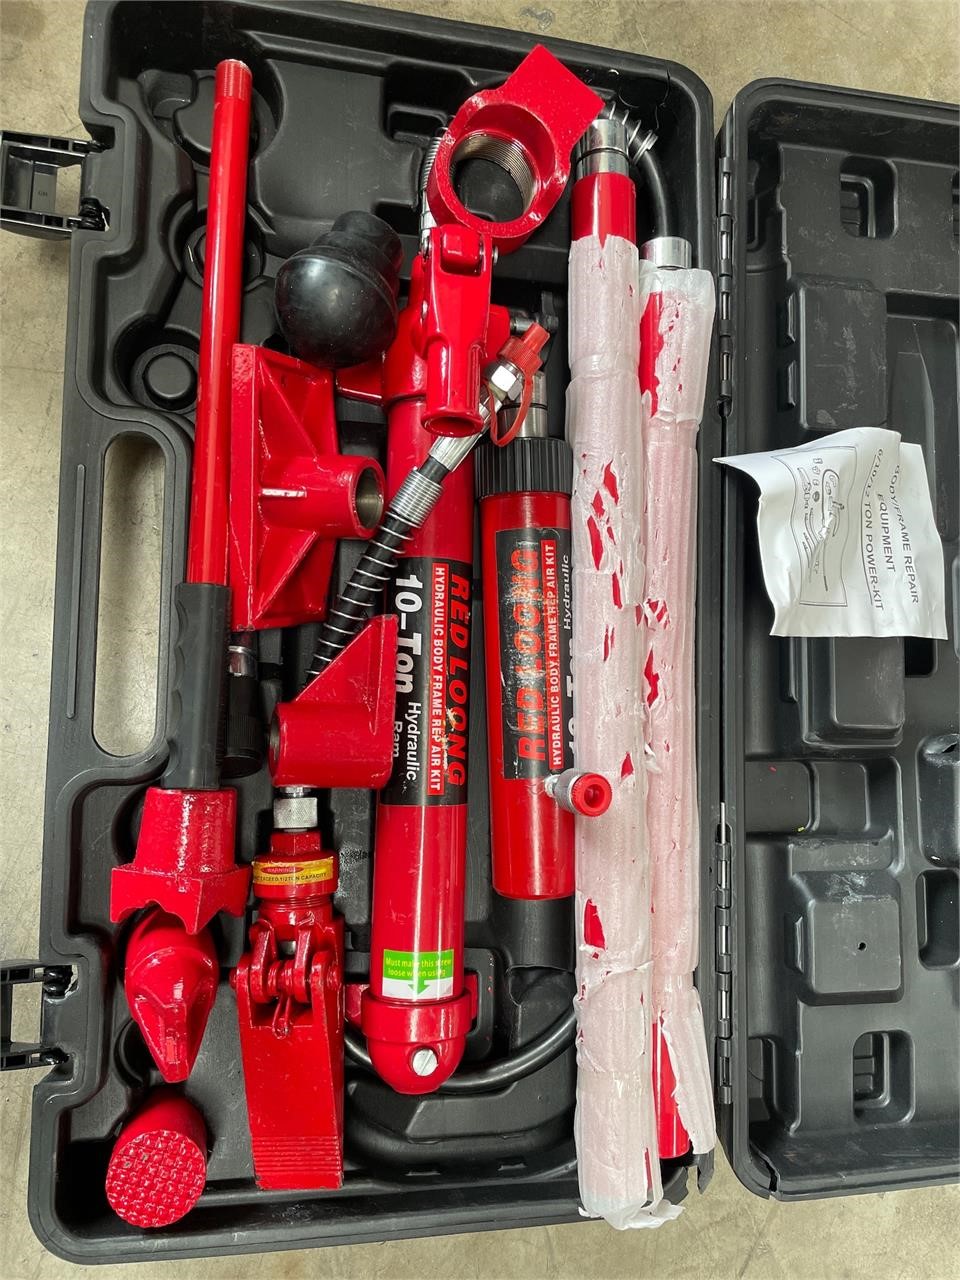 EDLOONG 10T Hydraulic Jack  Frame Repair Kit